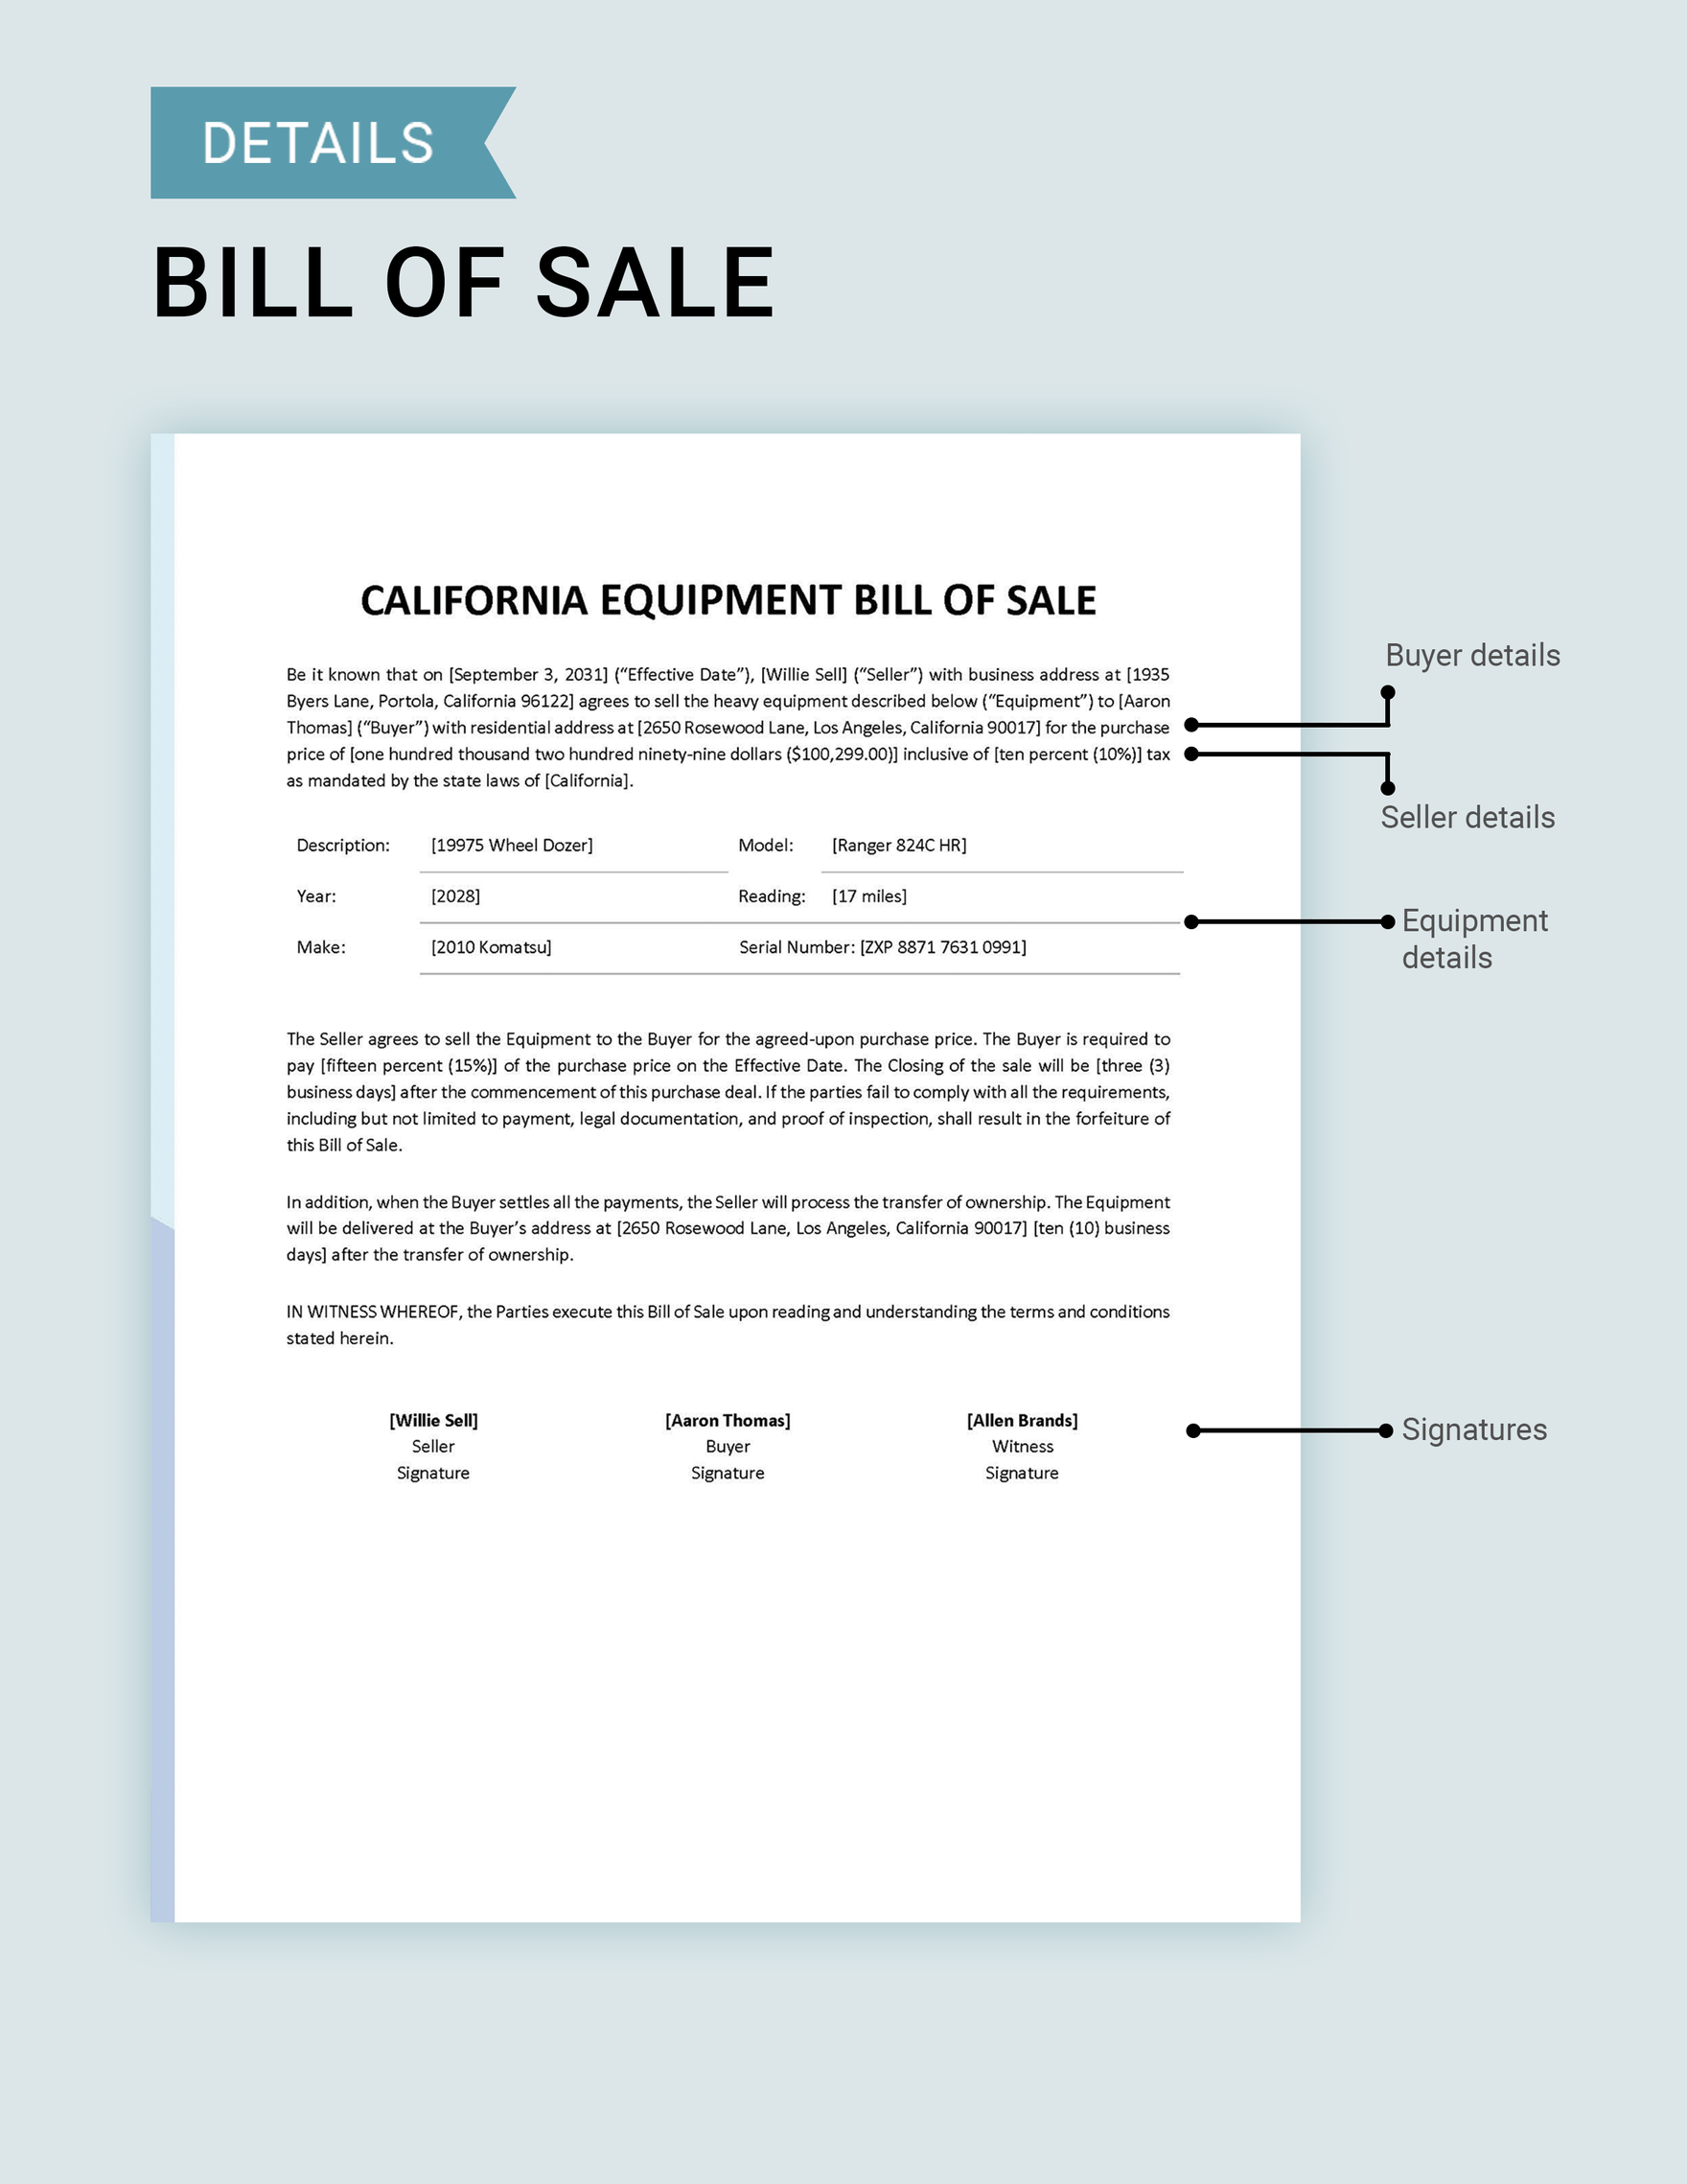 California Equipment Bill of Sale Template